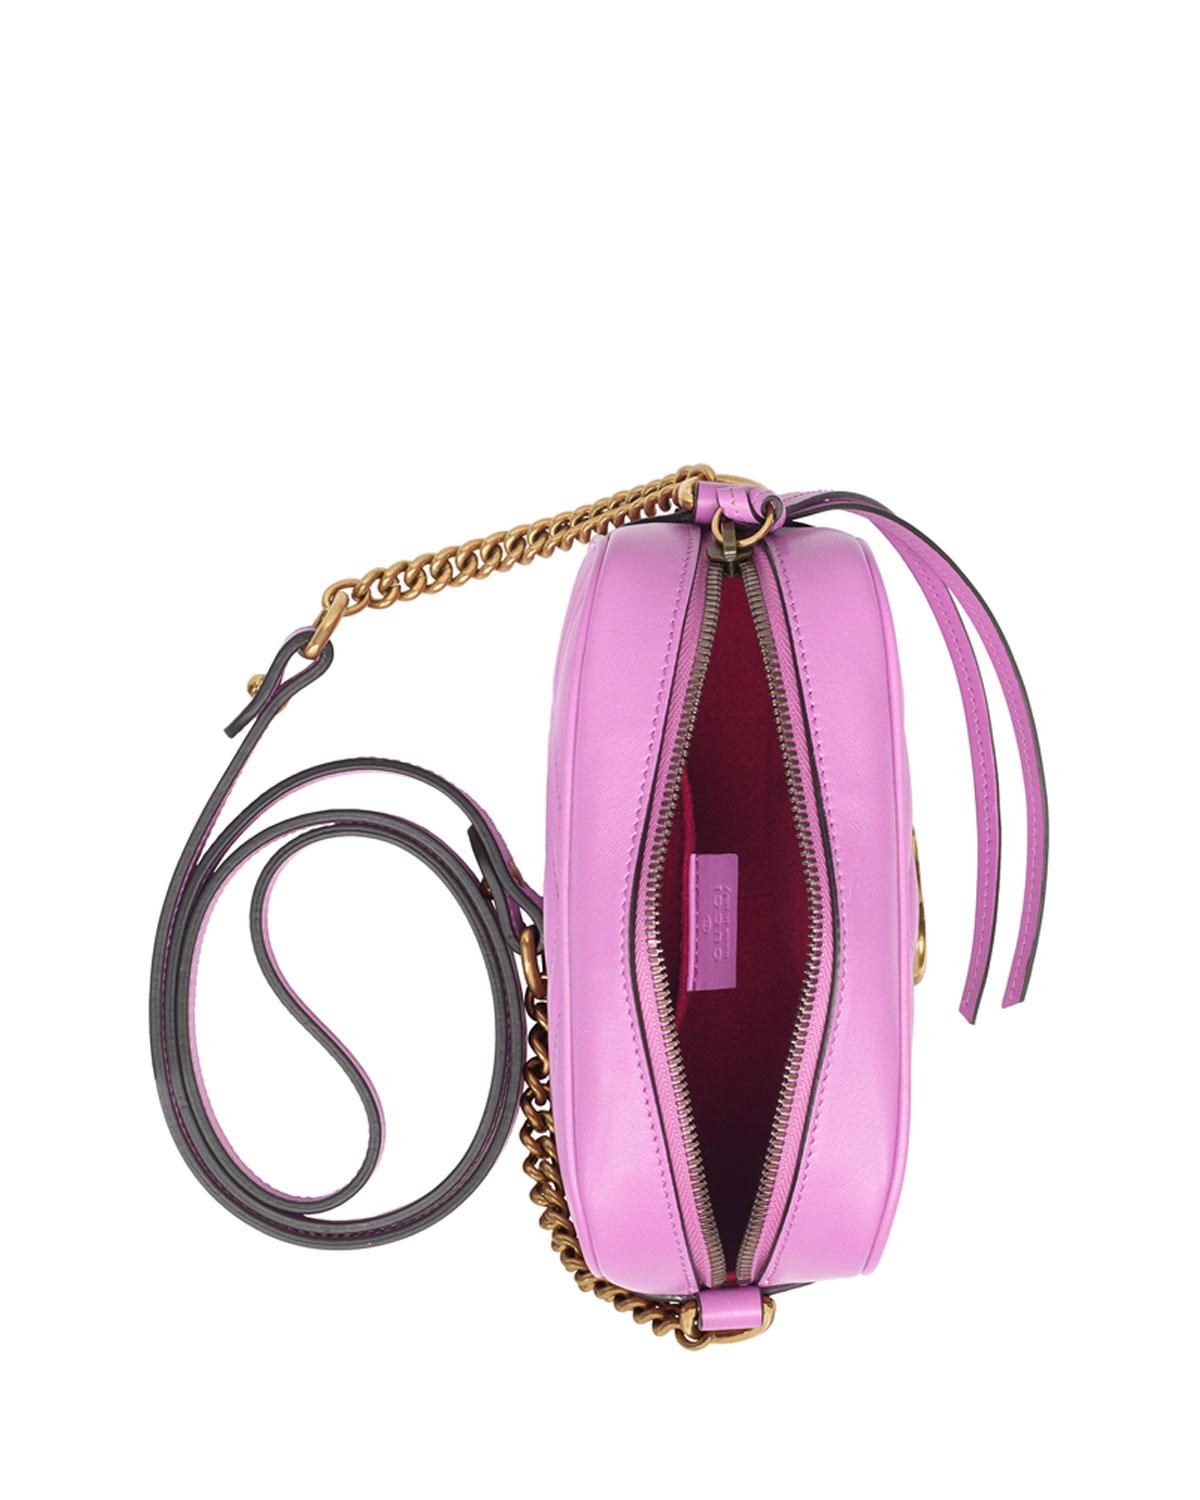 Gucci Gg Marmont Mini Matelassé Camera Bag in Pink - Lyst